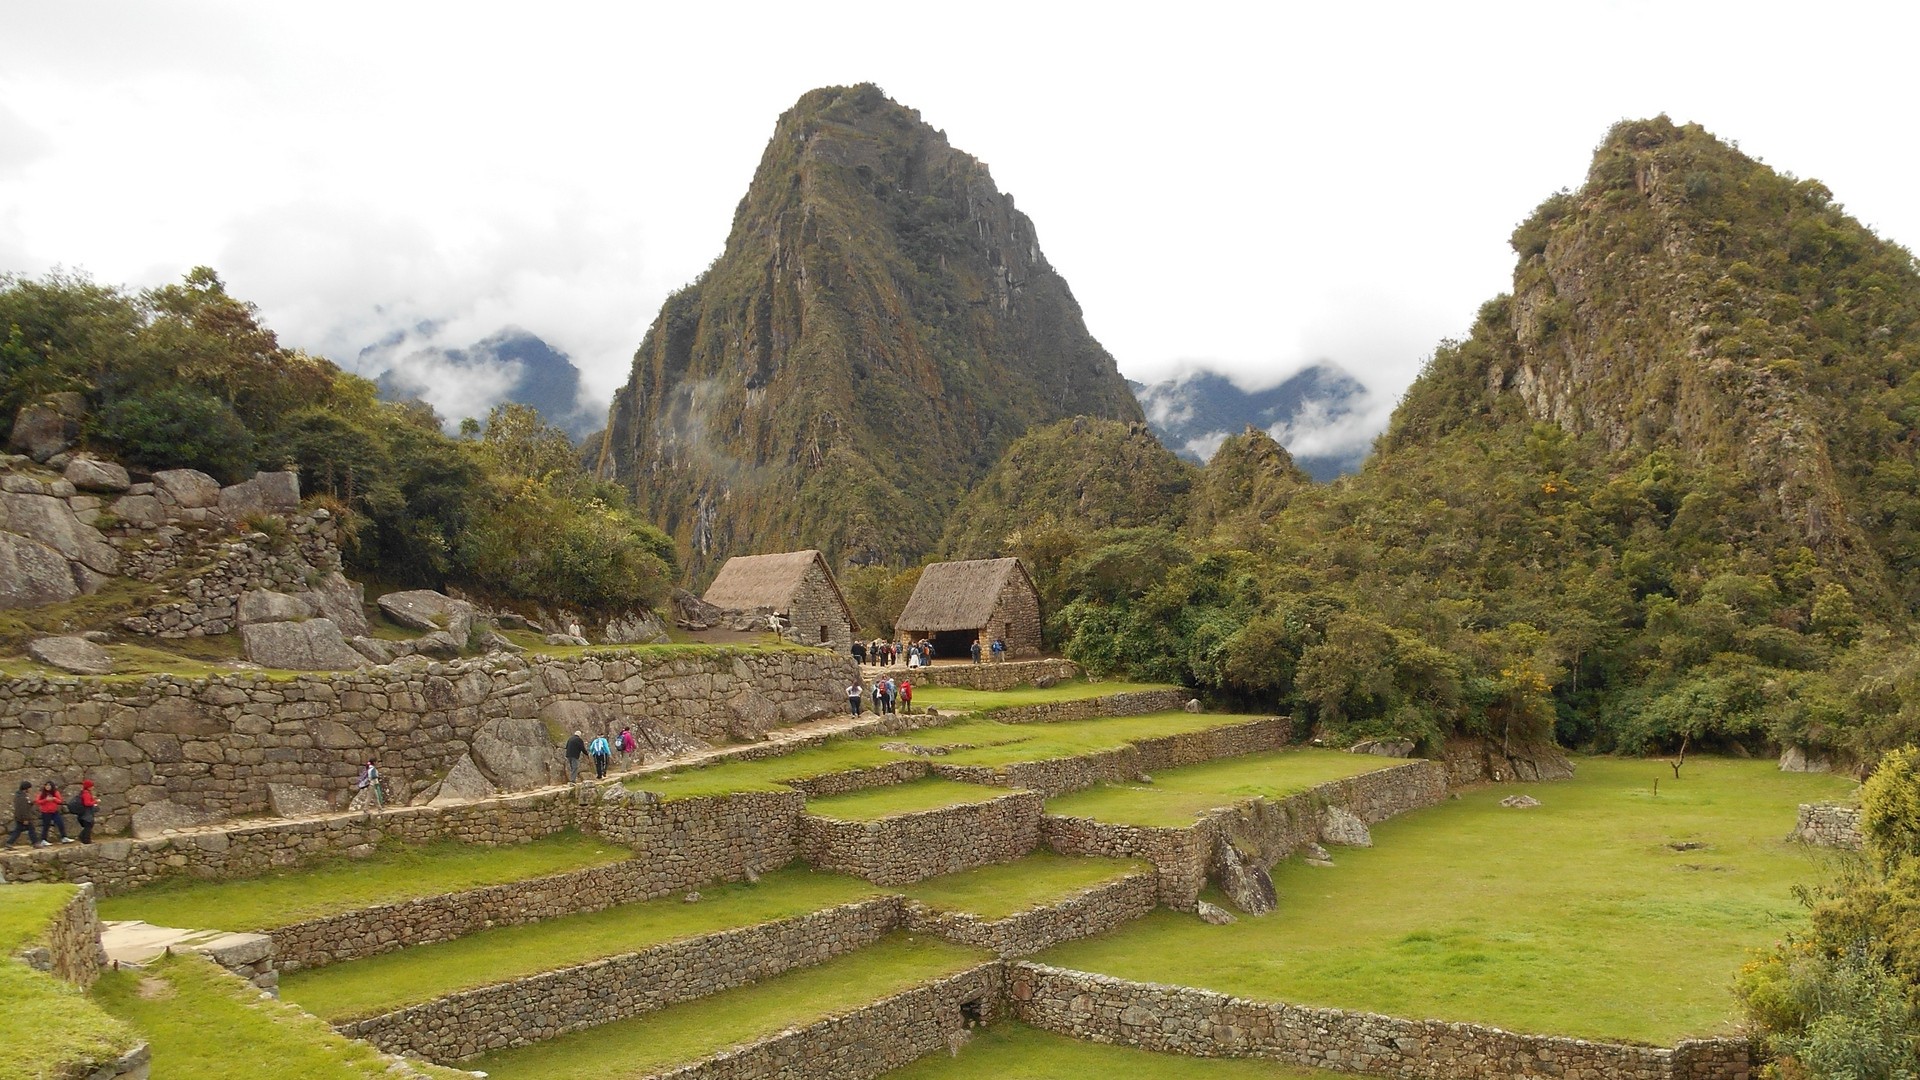 1920x1080 wallpapers: Machu Picchu, Perù, edifici, erba (image)